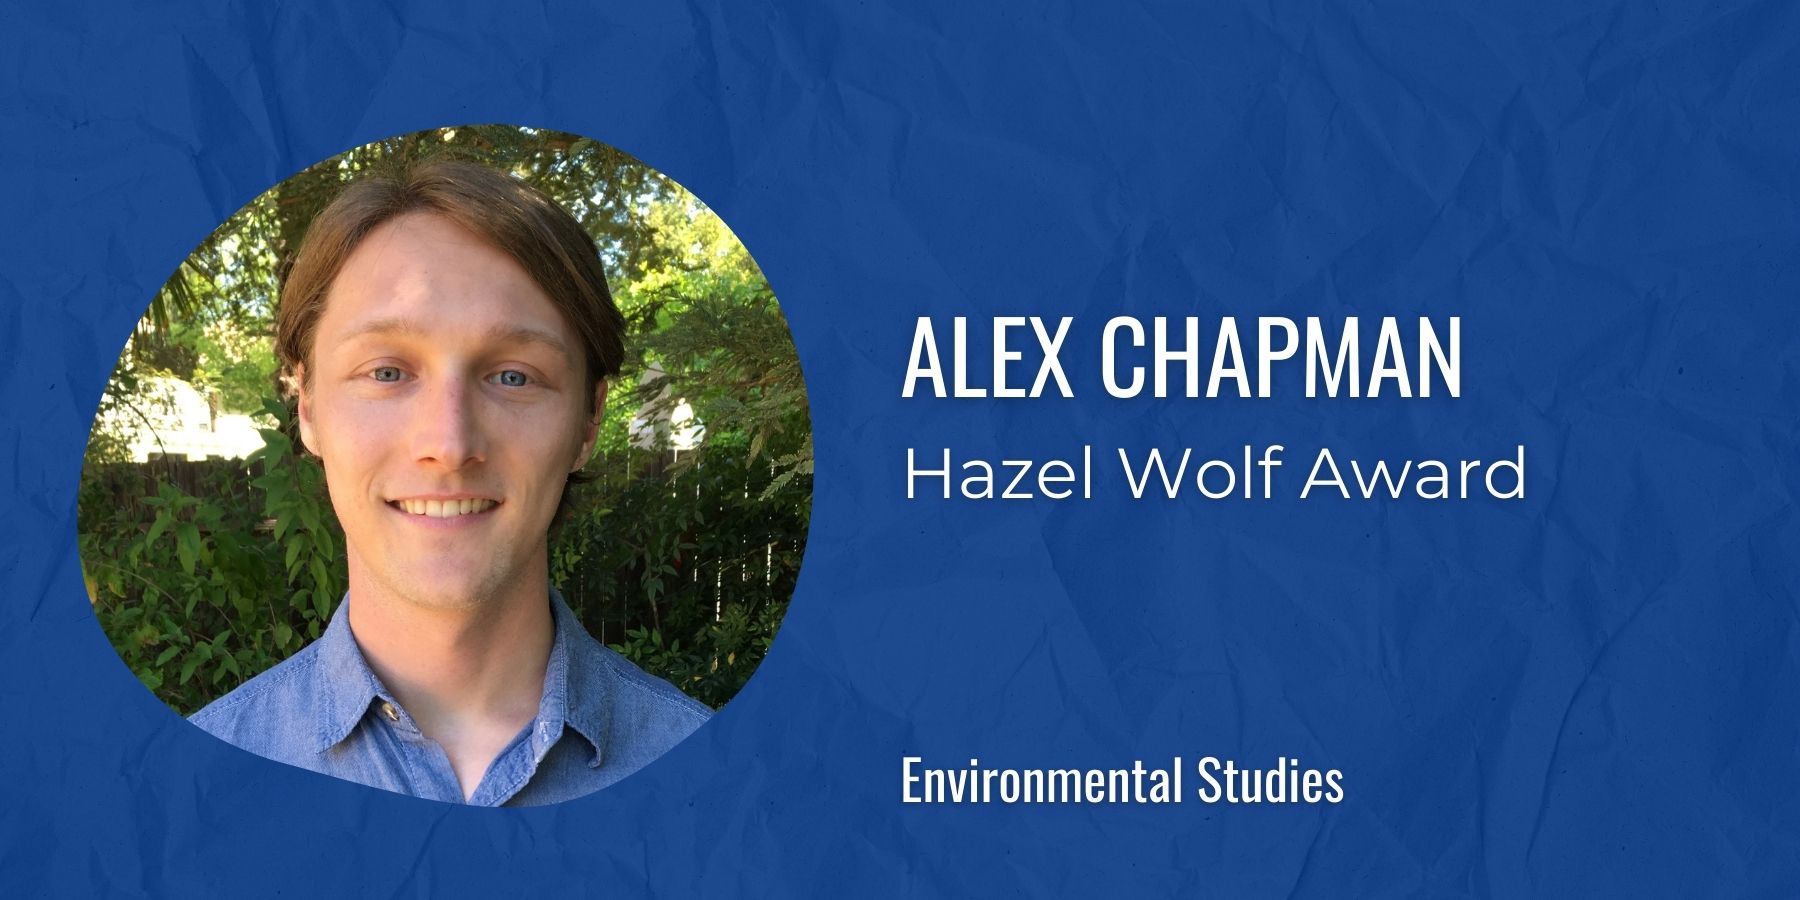 Image of Alex Chapman with text: Hazel Wolf Award, Environmental Studies
